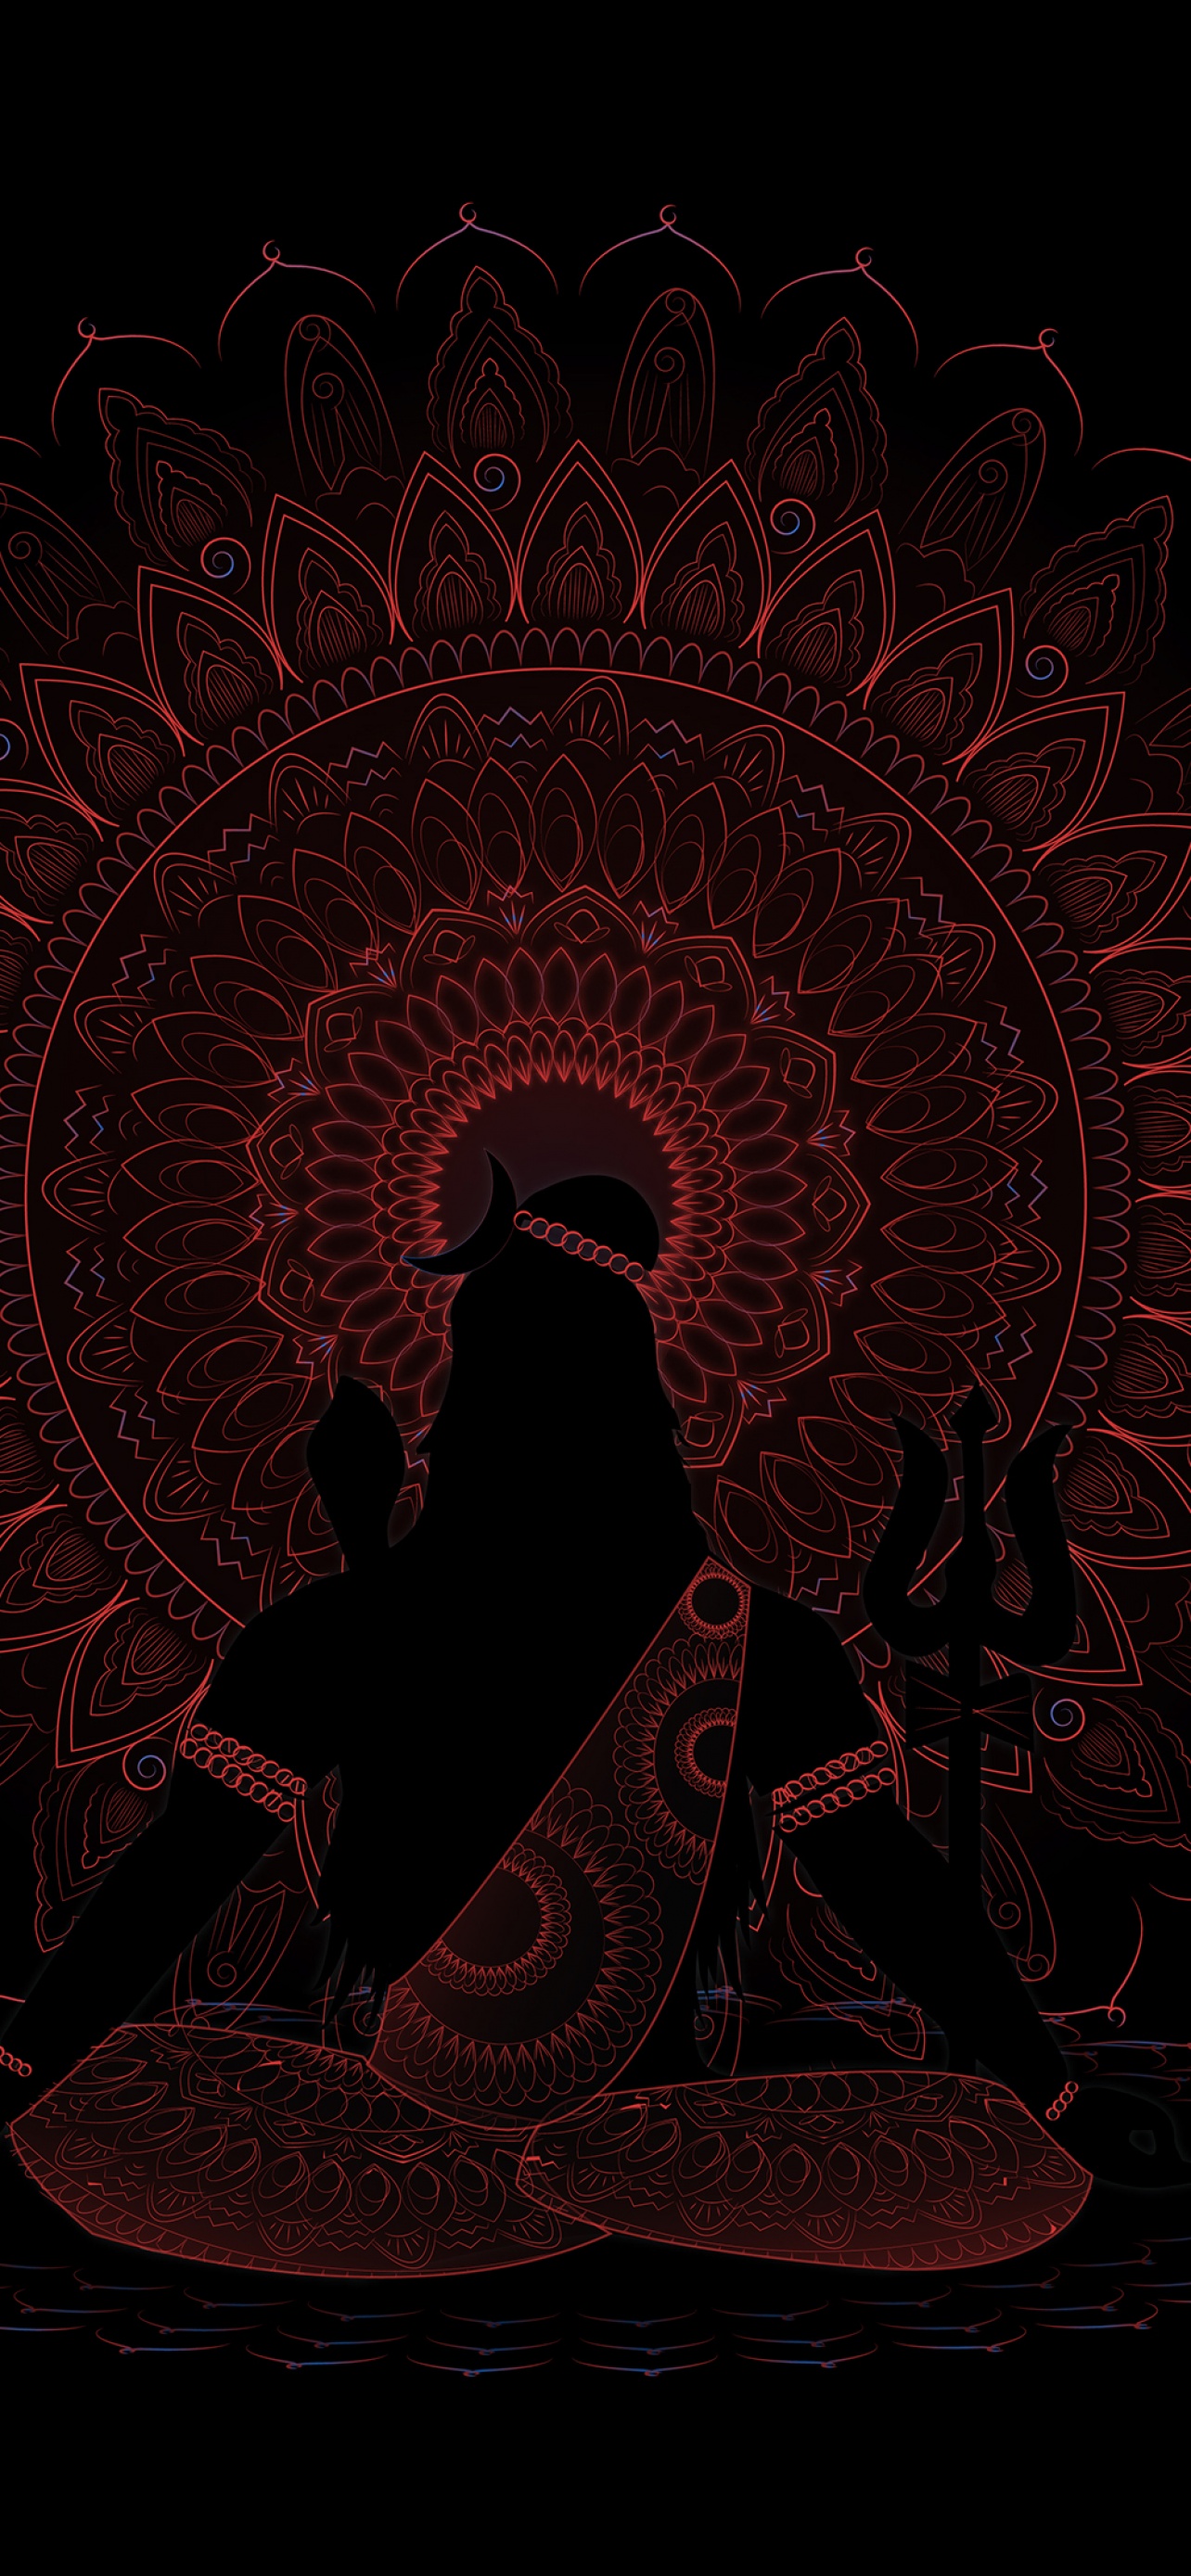 Lord Shiva Digital Art for Sale - Pixels